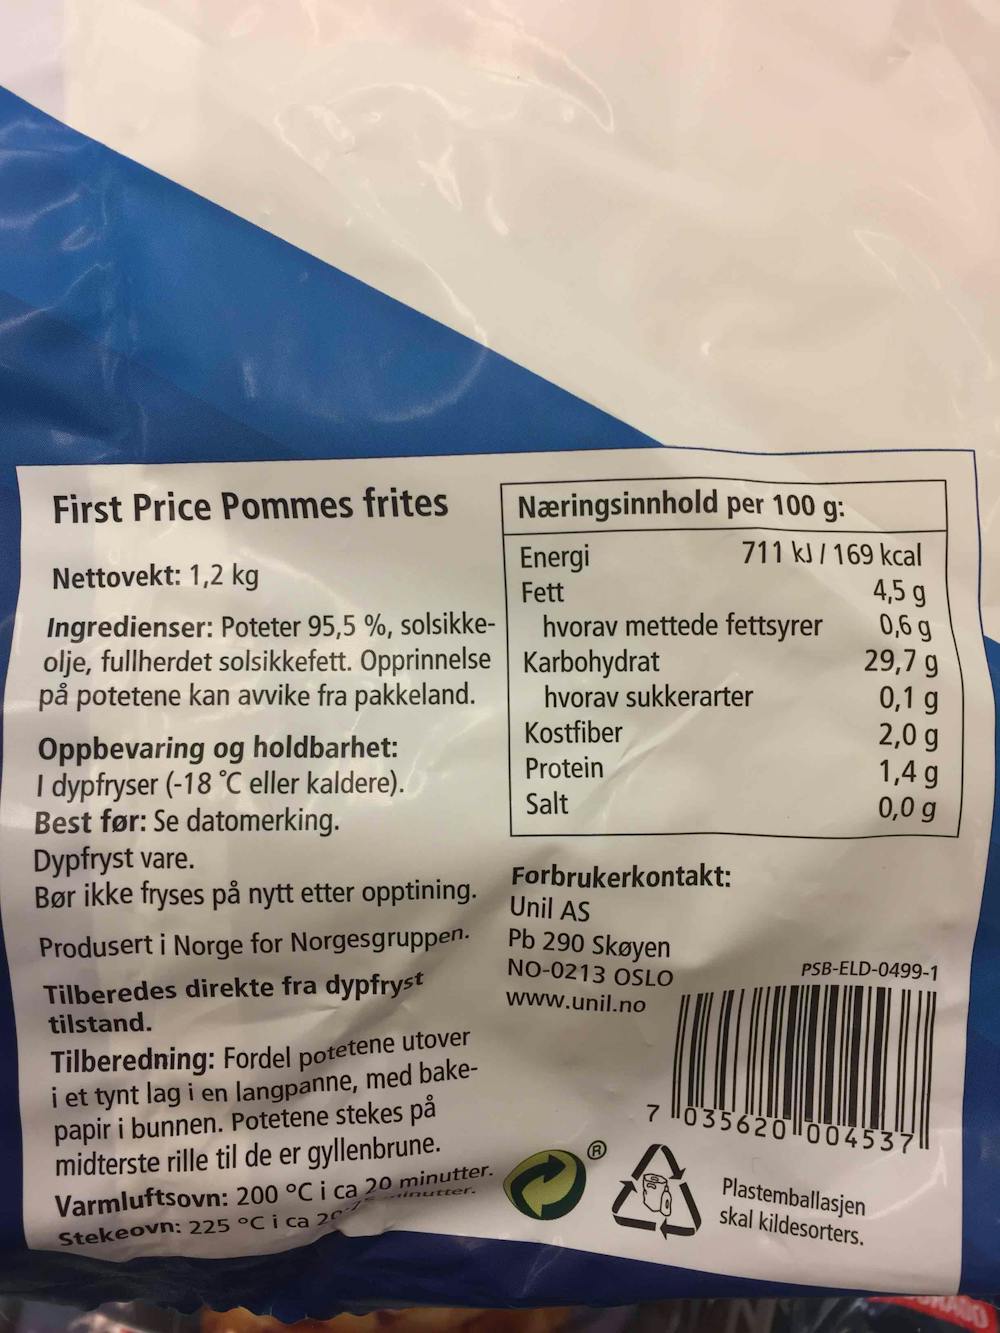 Ingredienslisten til First price Pommes frites